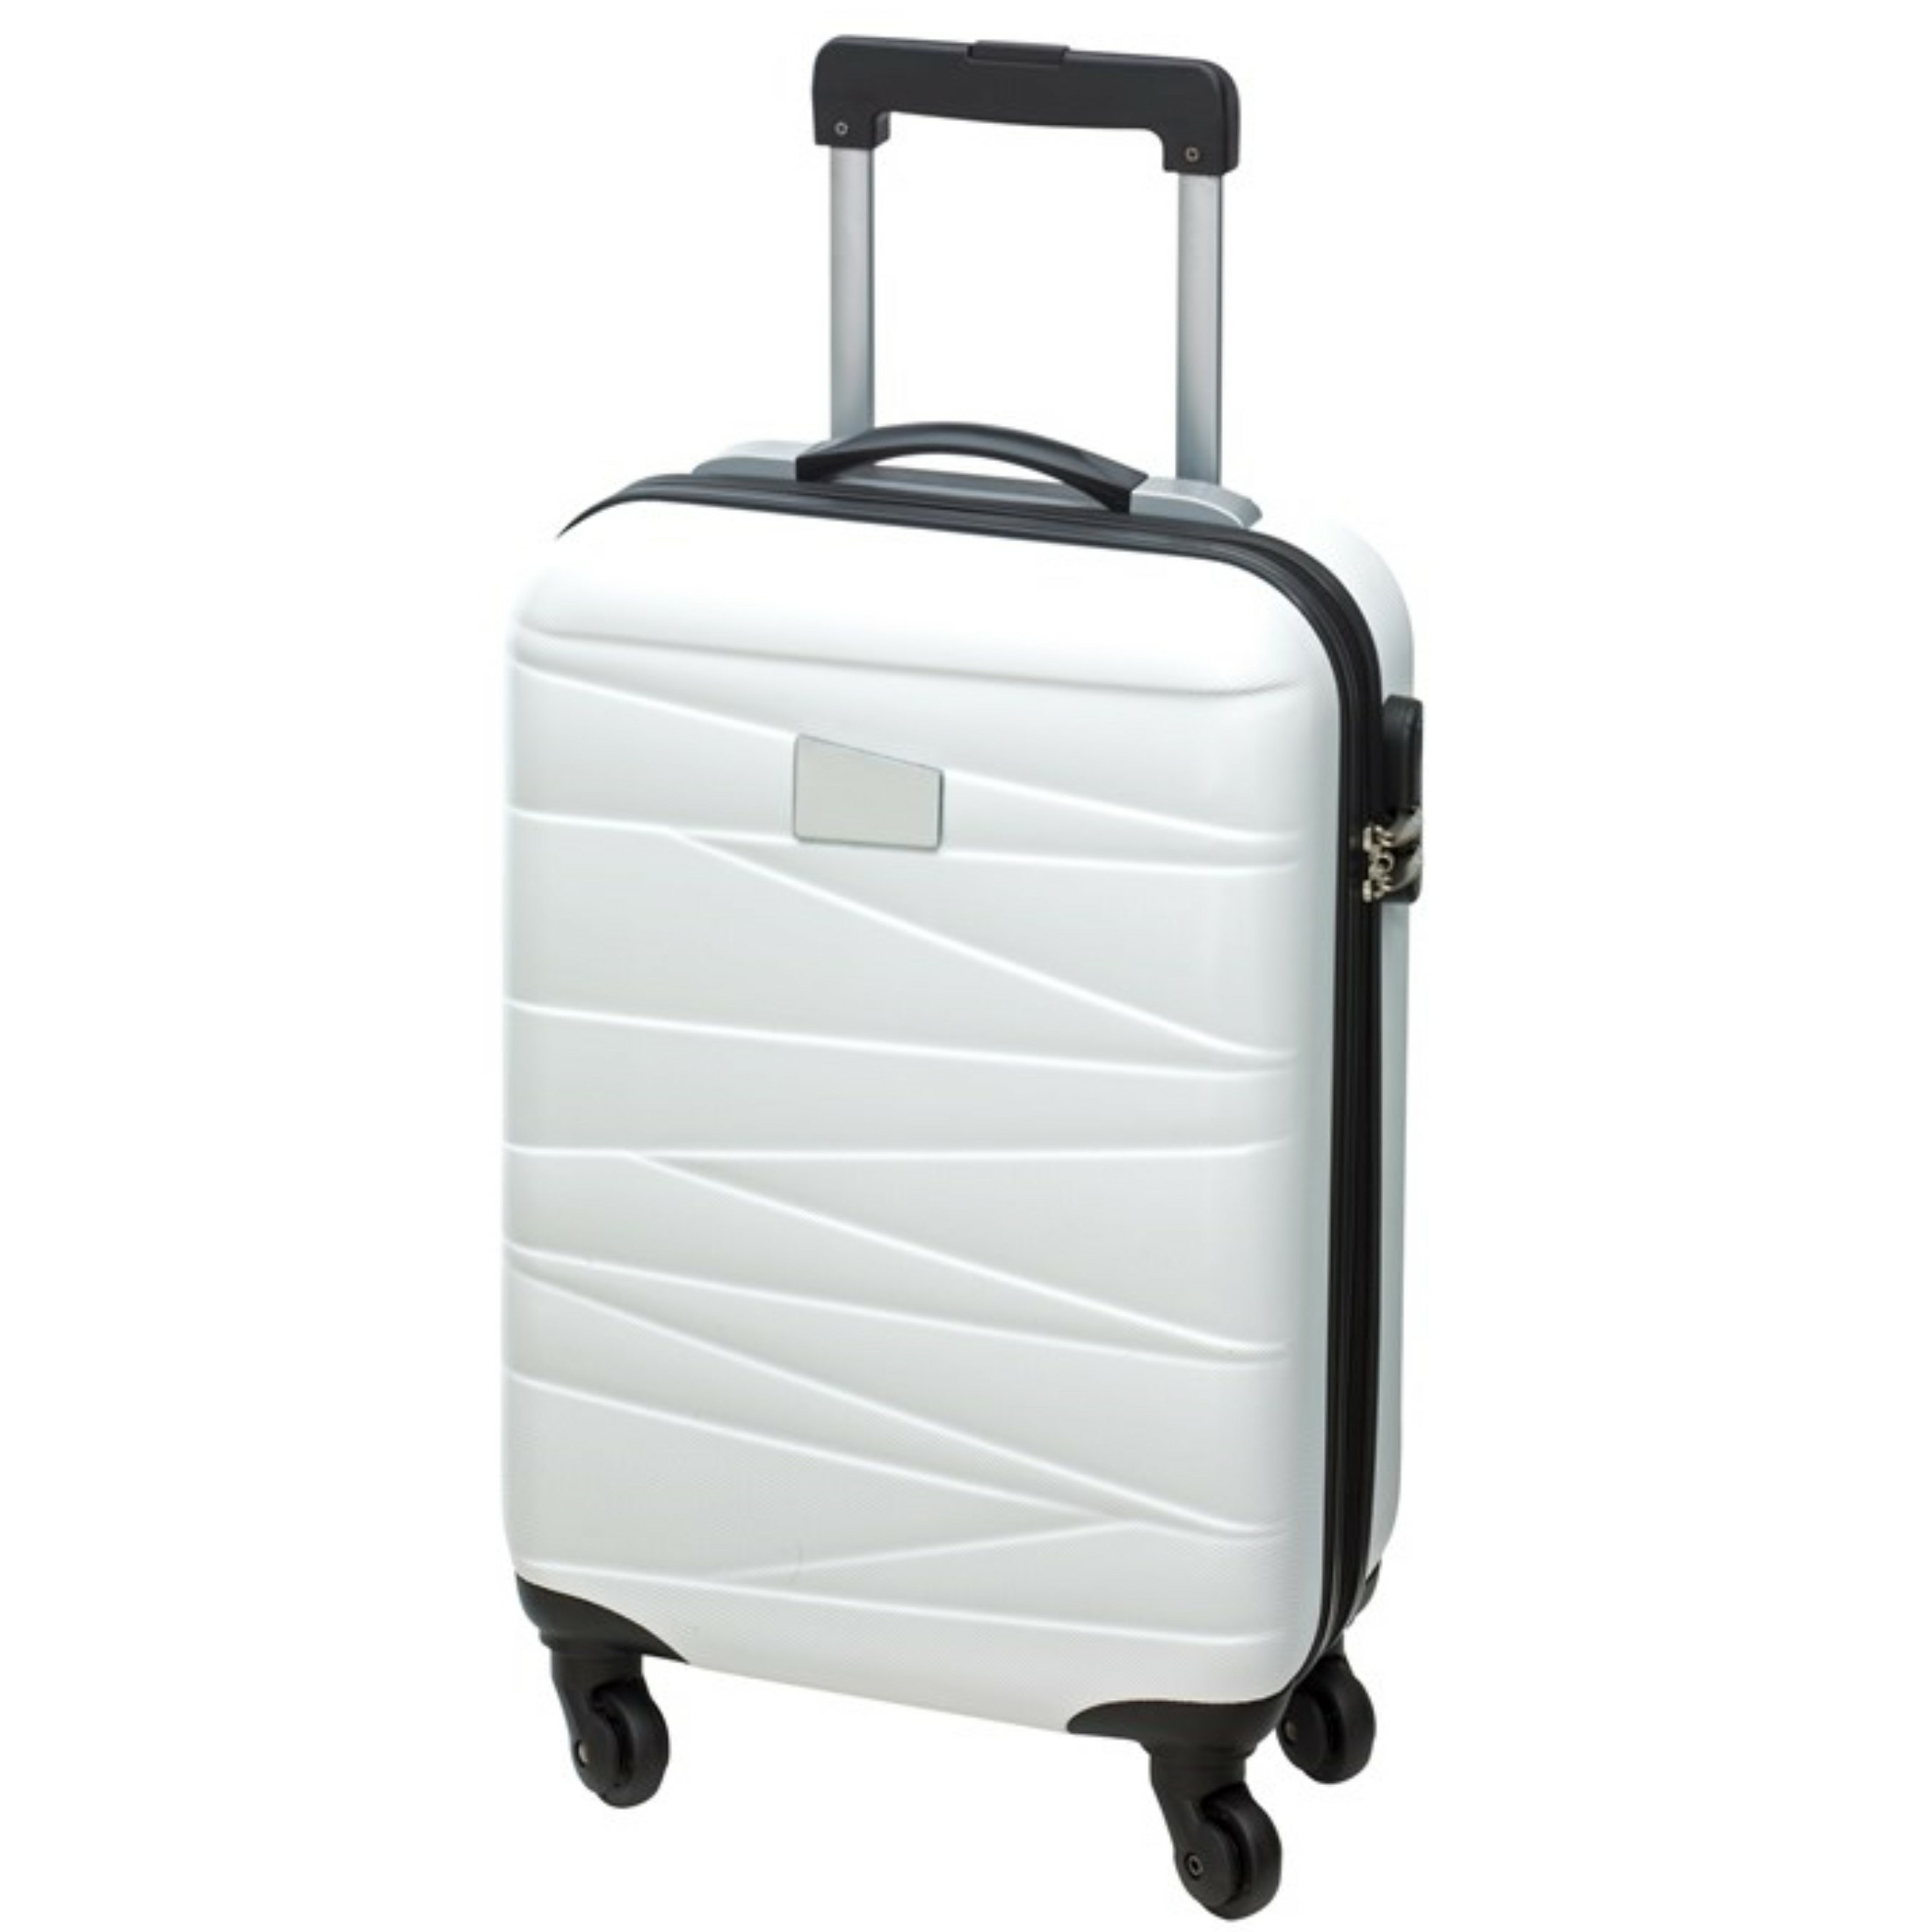 Cabine handbagage reis trolley koffer met zwenkwielen 55 x 35 x 20 cm wit